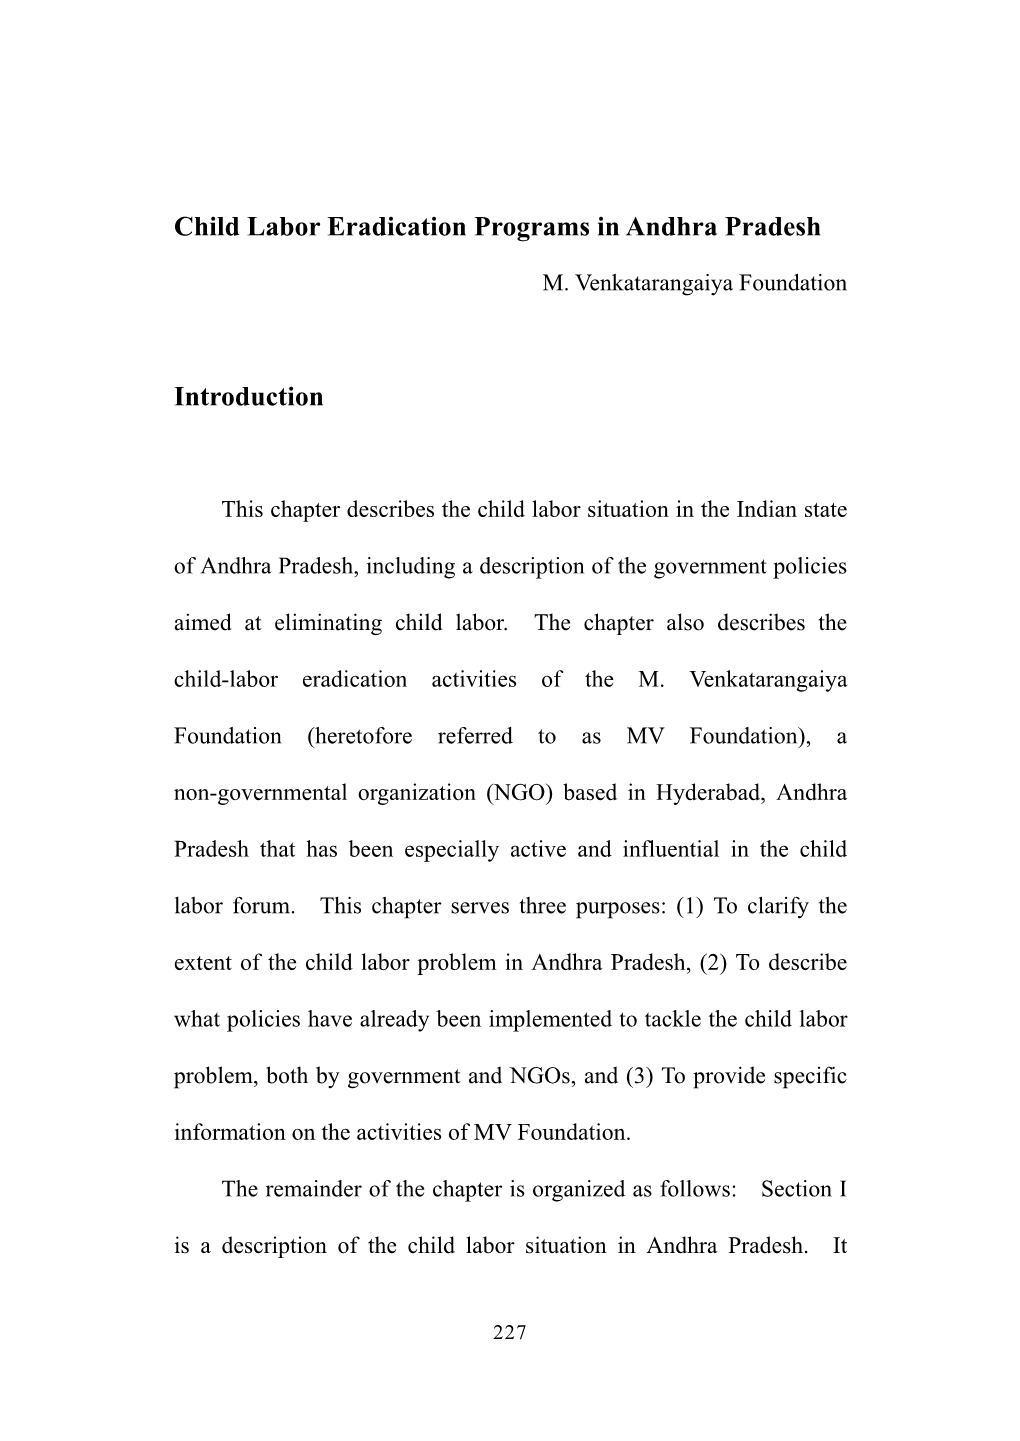 Child Labor Eradication Programs in Andhra Pradesh